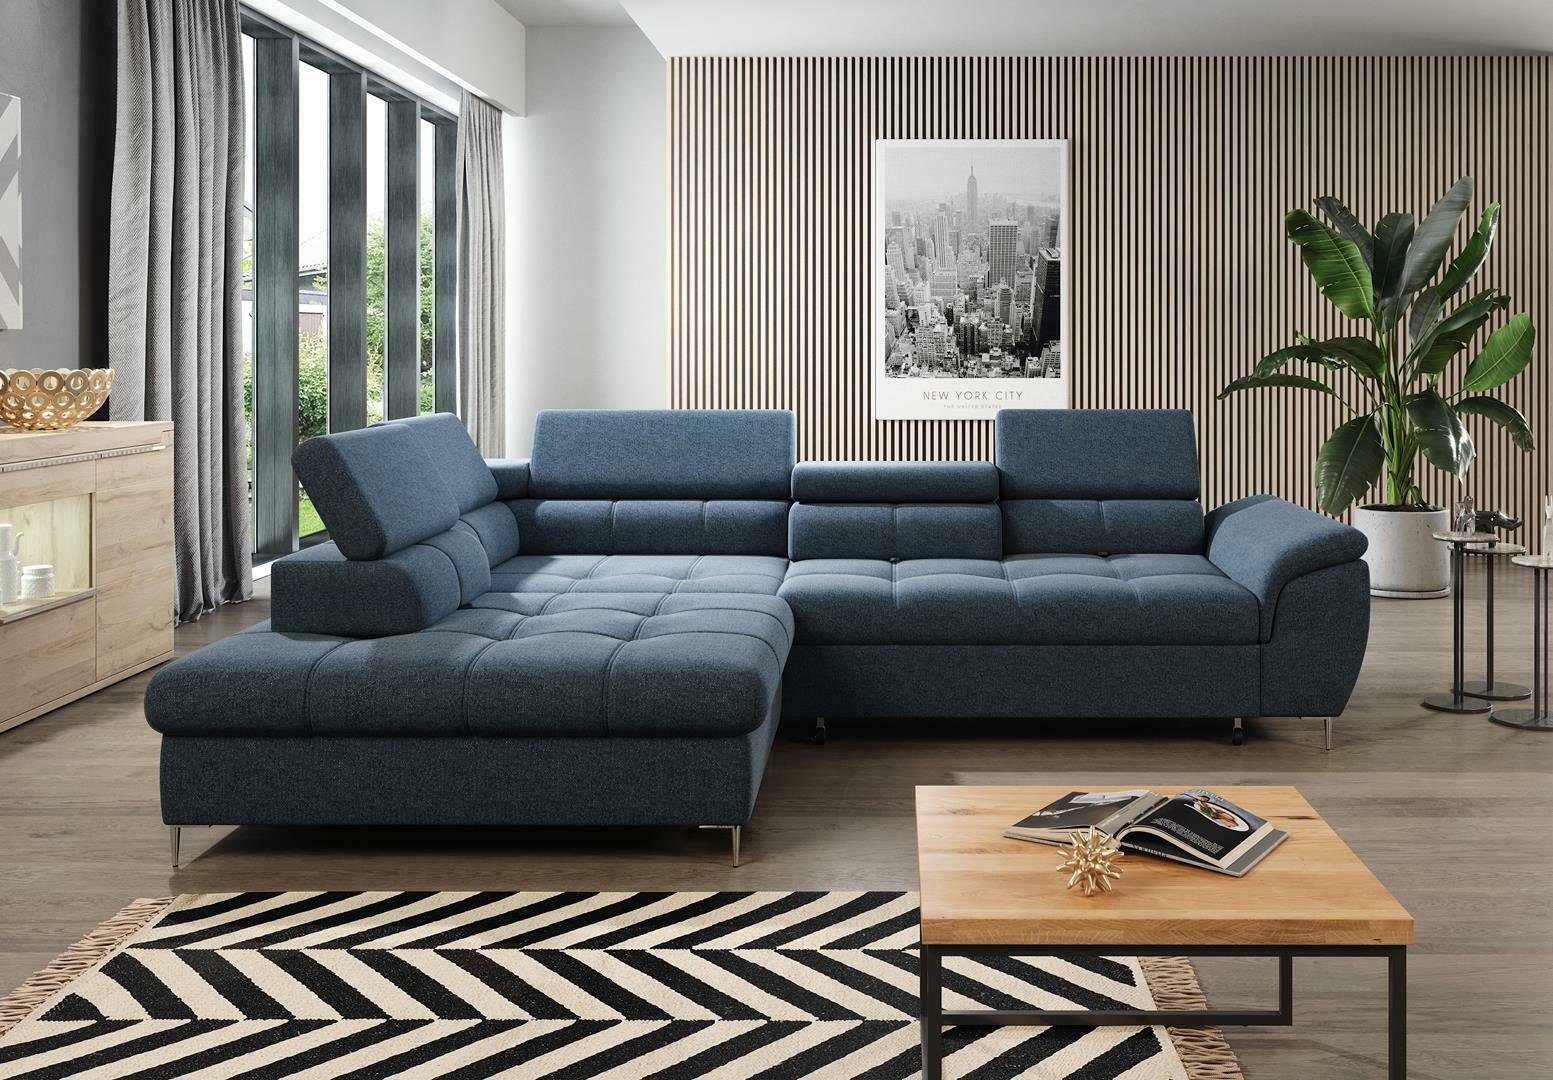 JVmoebel Ecksofa Schlafsofa Design Bettfunktion Mit Textil Bettfunktion Couch L-form Ecksofa Sofa